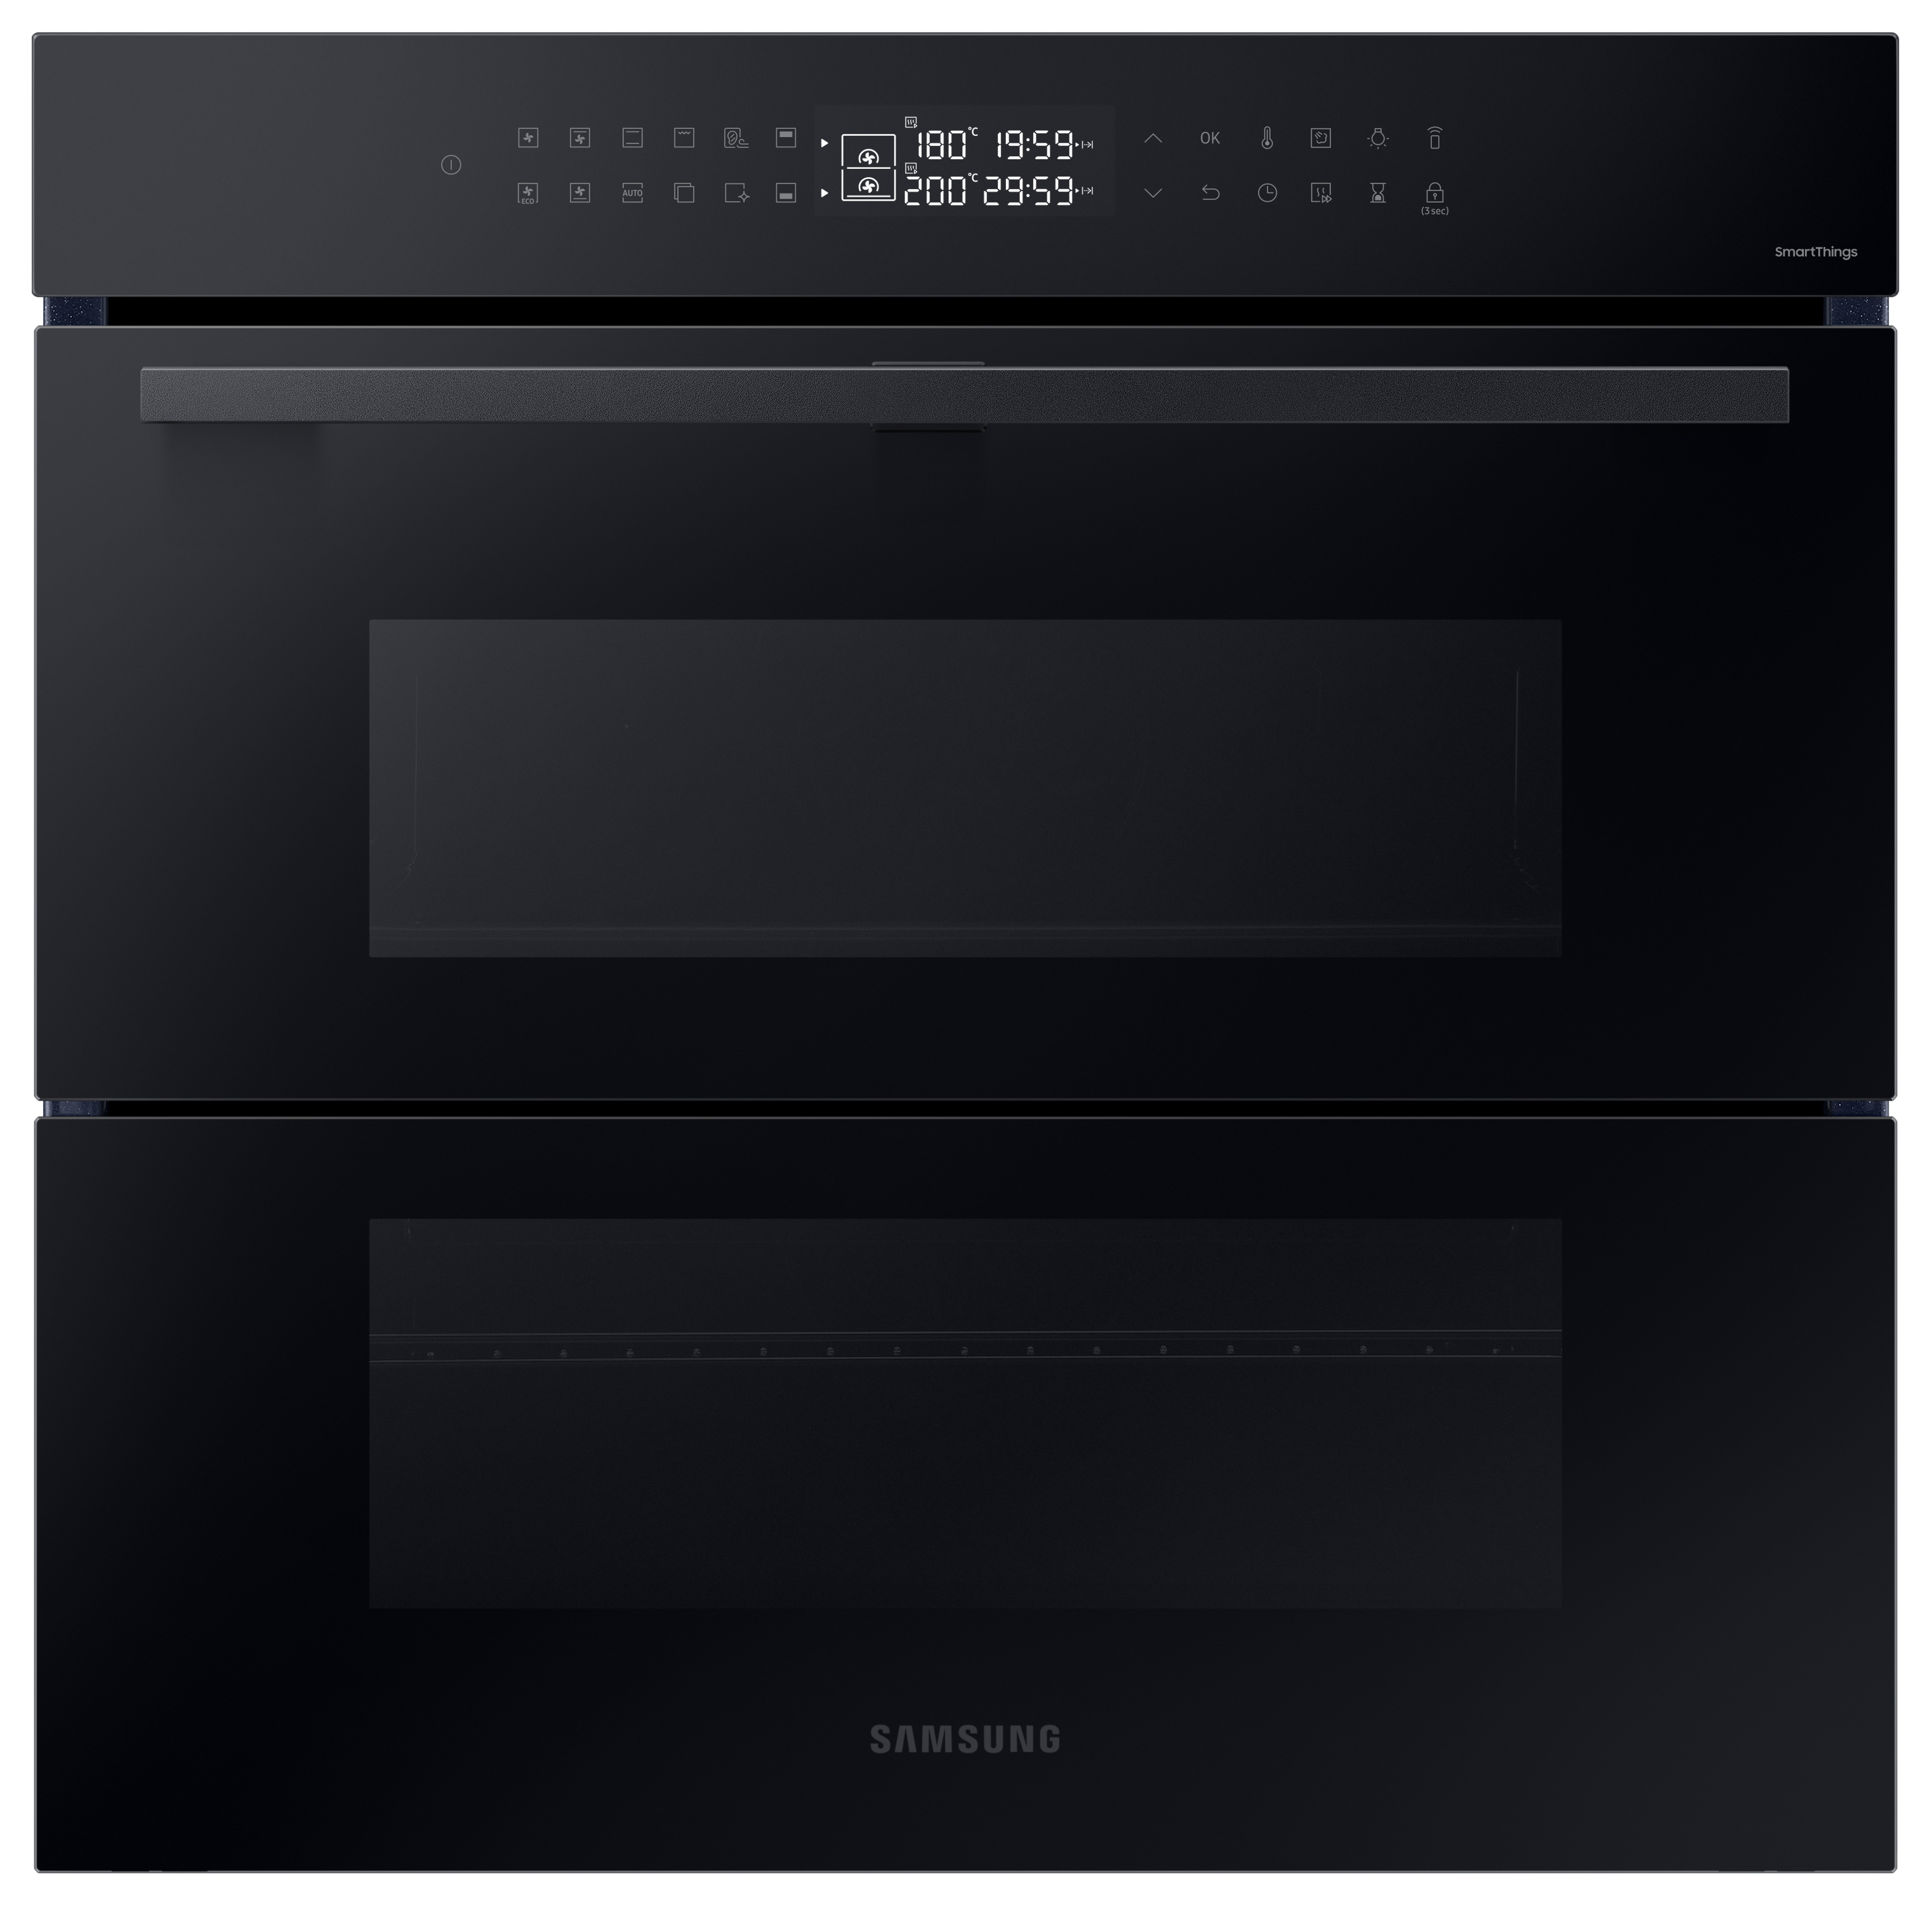 Samsung NV7B4355VAK/U4 A+ Series 4 Dual Cook Flex Smart Oven - Black Glass